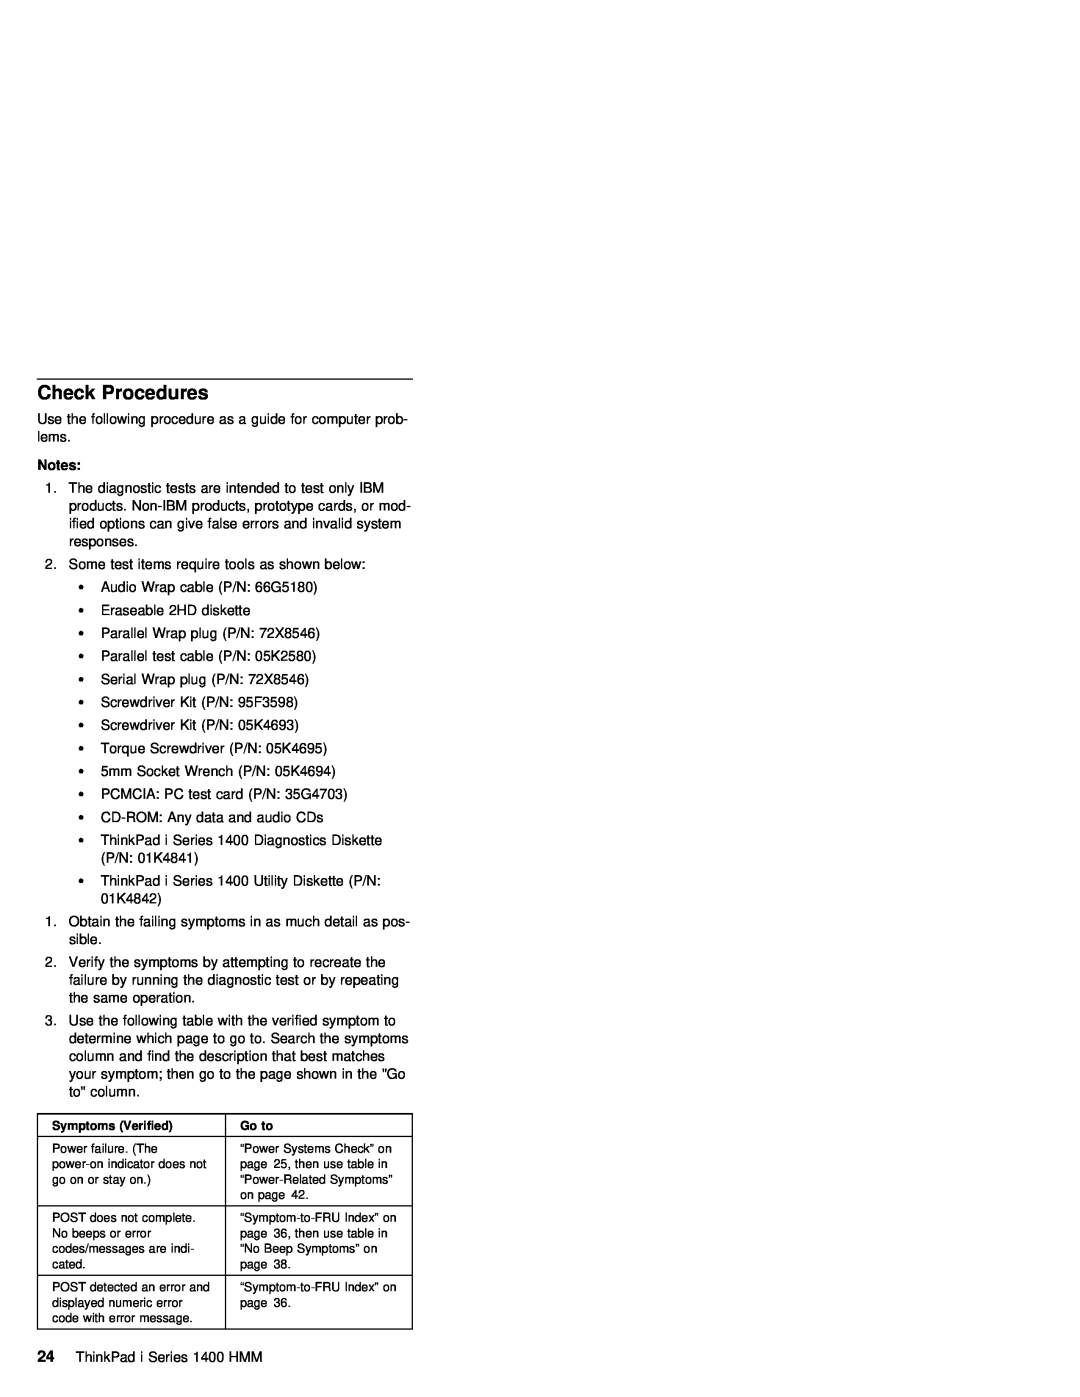 IBM 1400 (2611) manual Check Procedures, Verified 